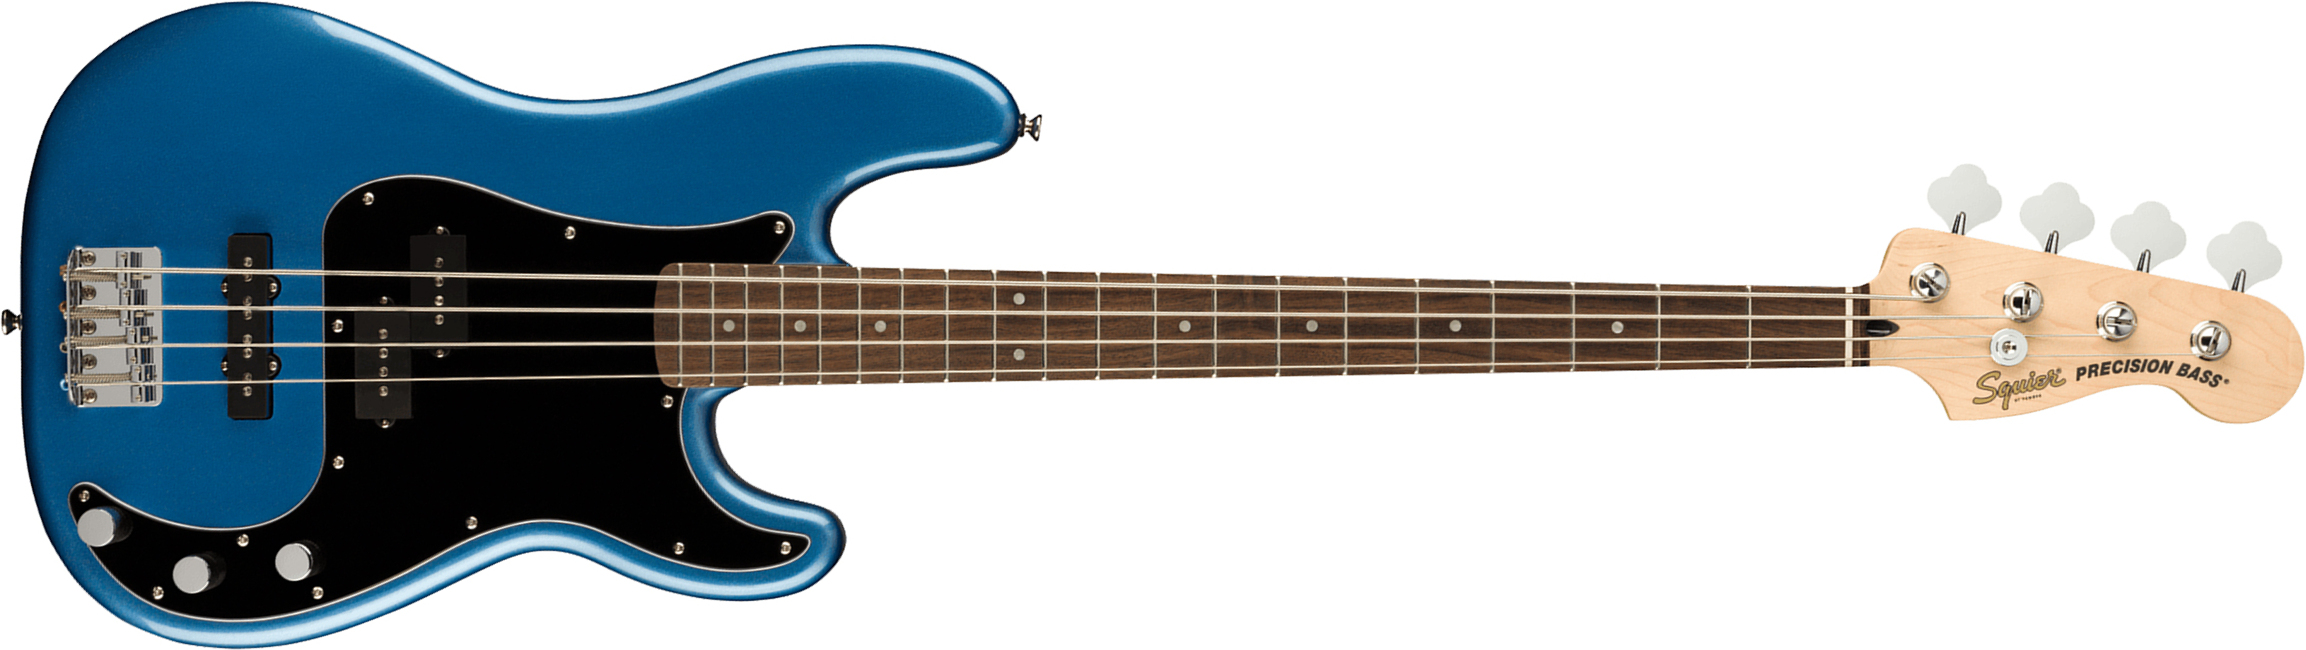 Squier Precision Bass Affinity Pj 2021 Lau - Lake Placid Blue - Solid body elektrische bas - Main picture